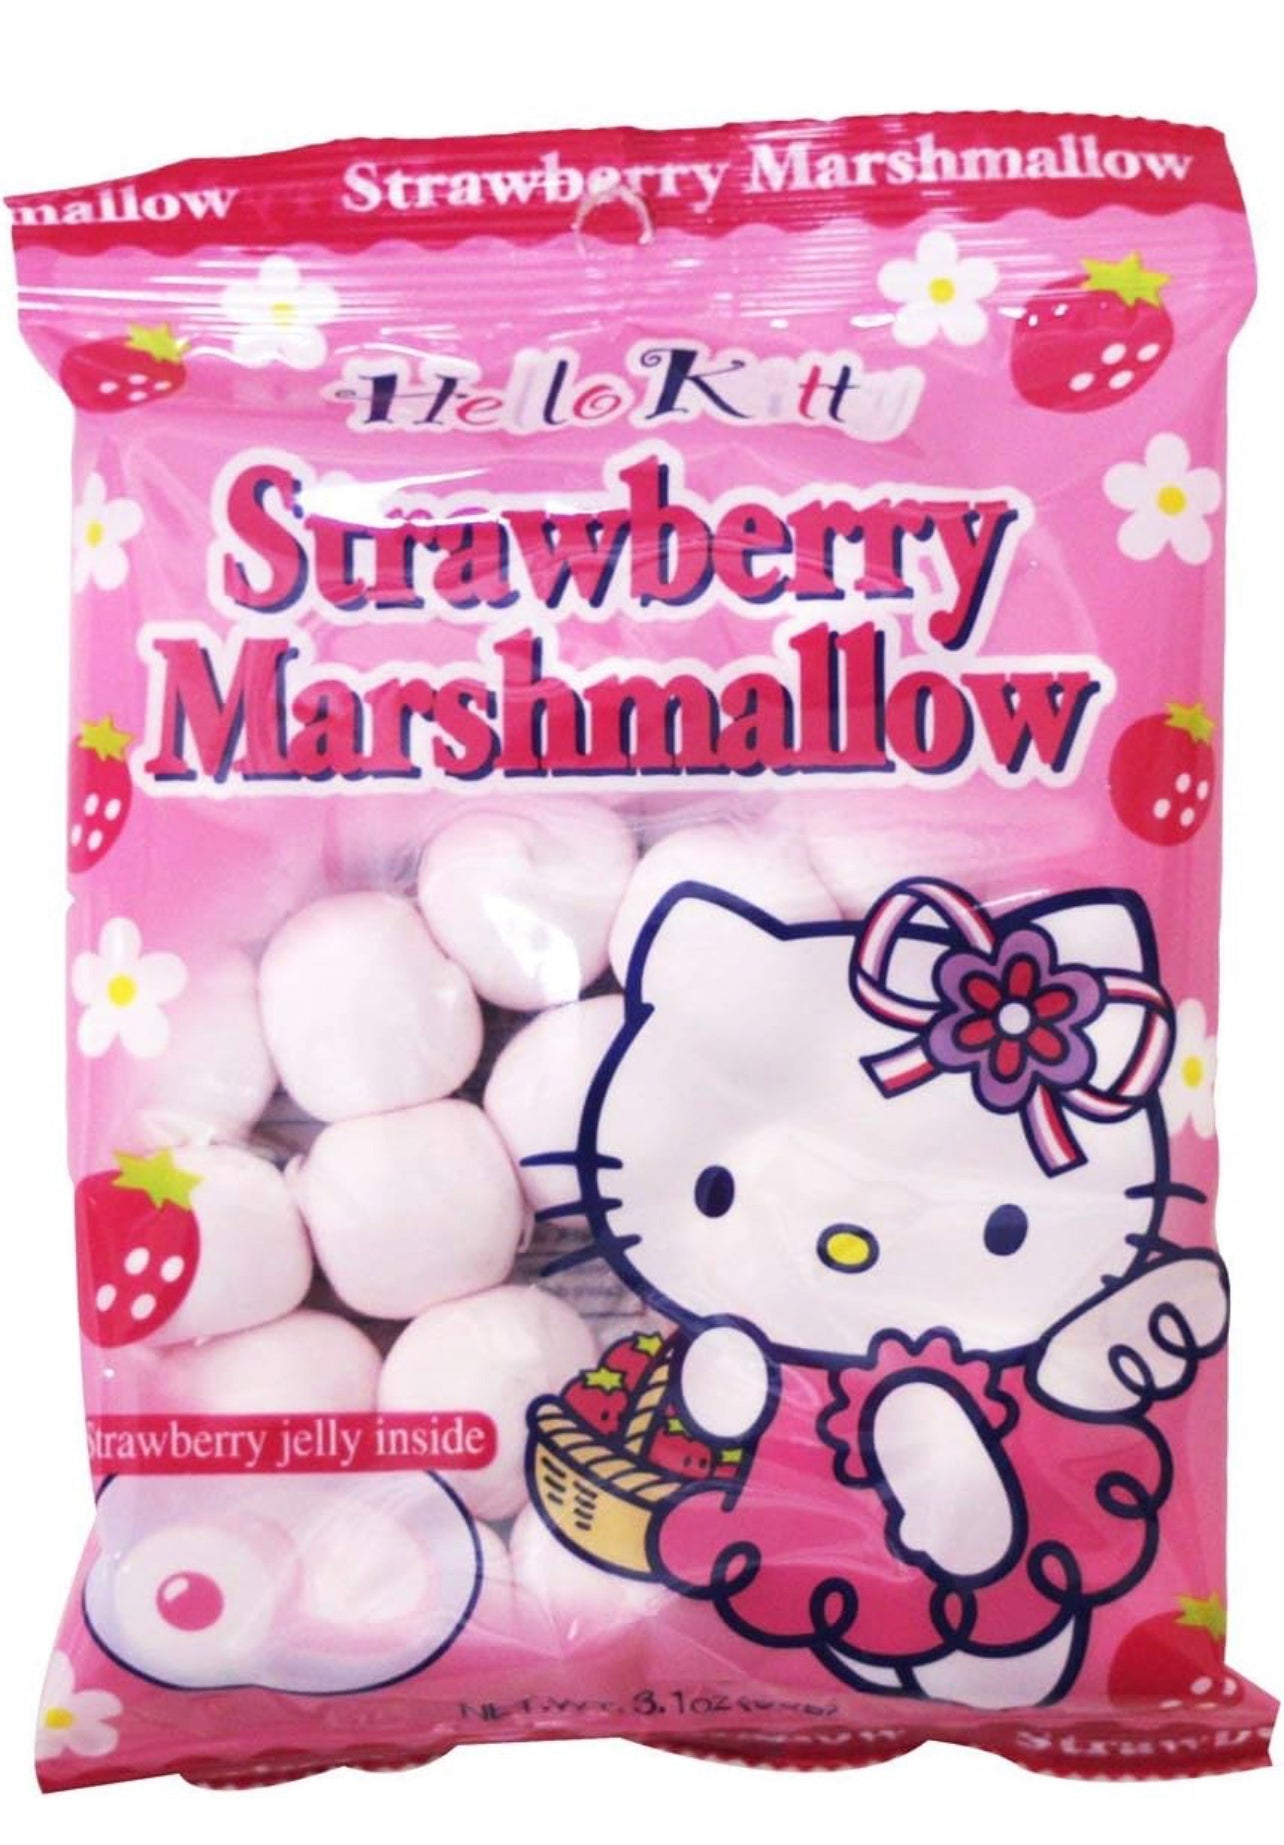 Hello Kitty Themed Valentine’s Day Basket